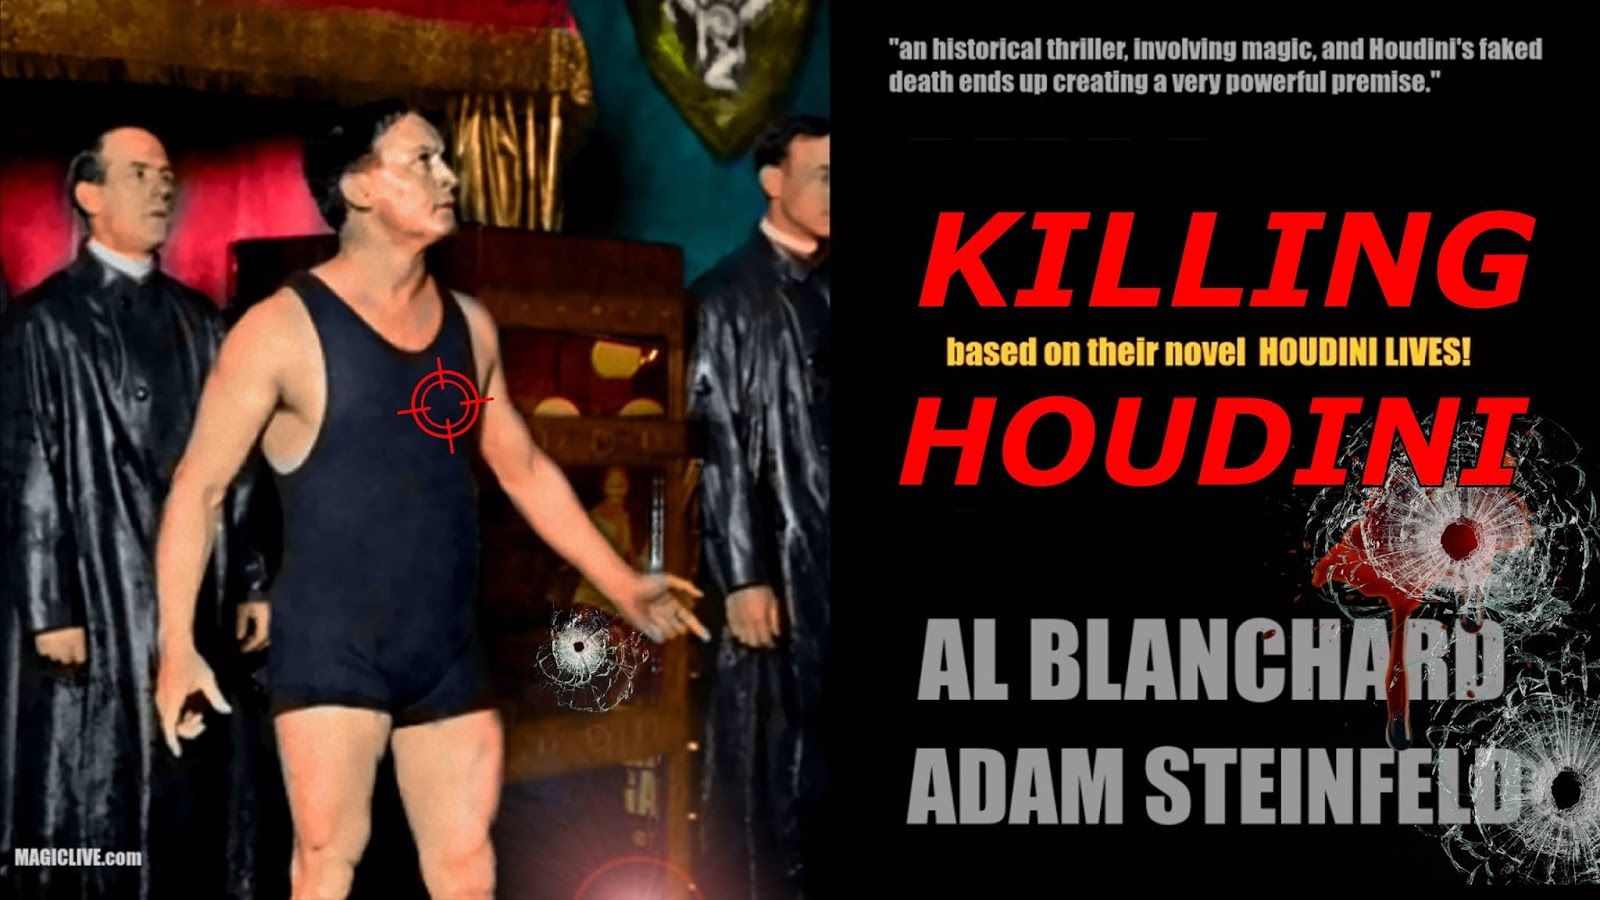 KILLING HOUDINI BY AL BLANCHARD AND ADAM STEINFELD